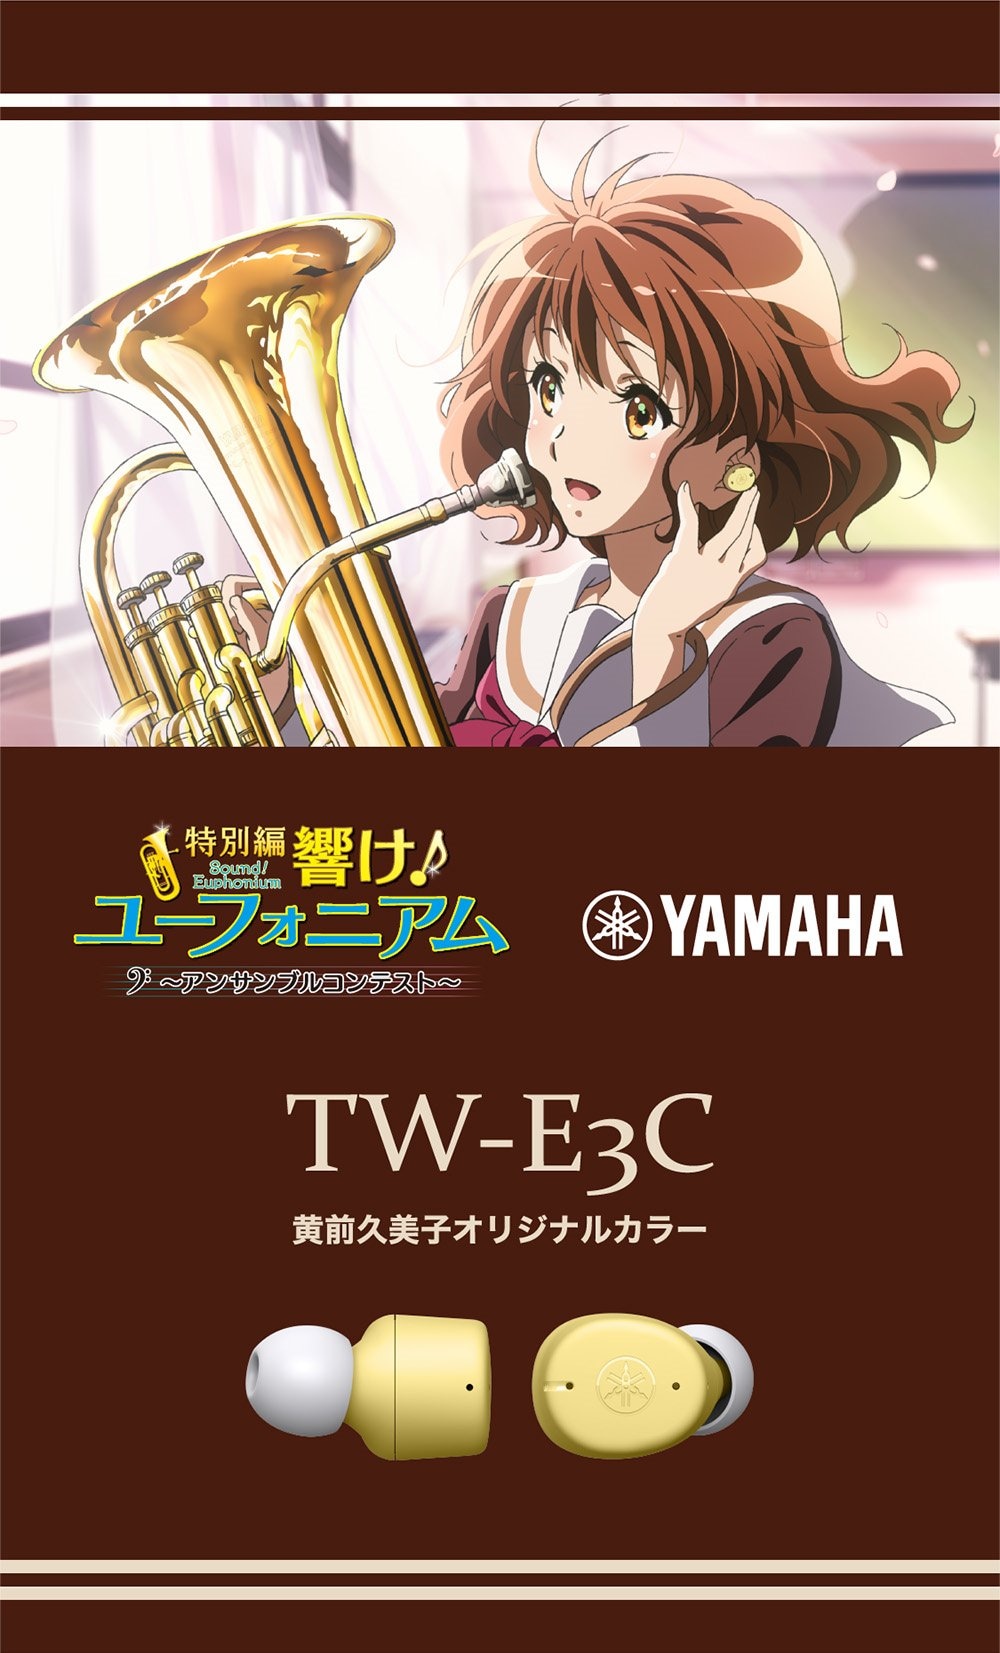 TW-E3C 黄前久美子オリジナルカラーページメイン画像